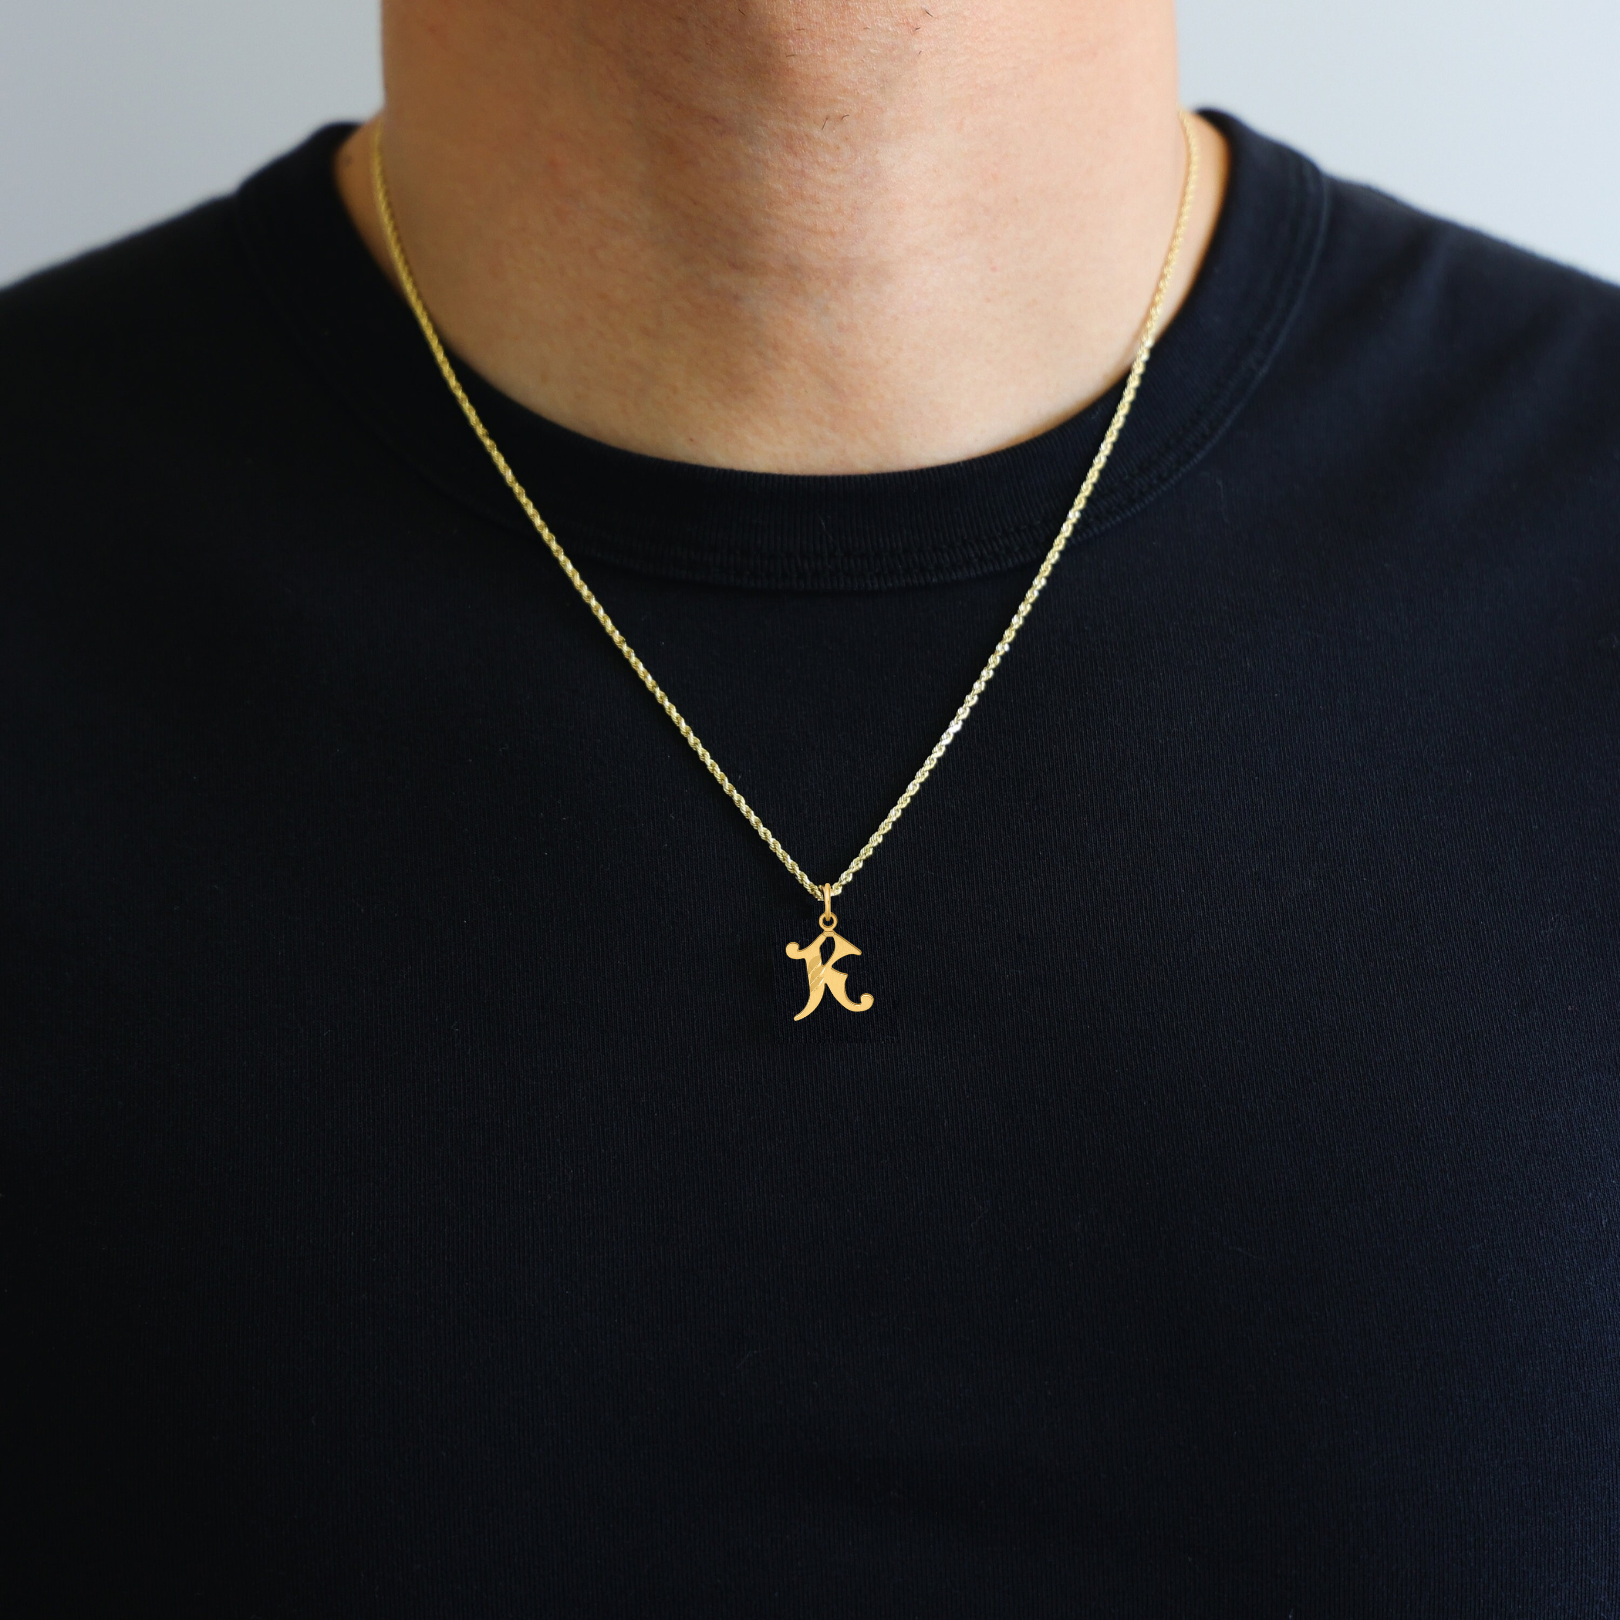 Gold Elegant Letter 'K' Charm  Model-C4833 - Charlie & Co. Jewelry